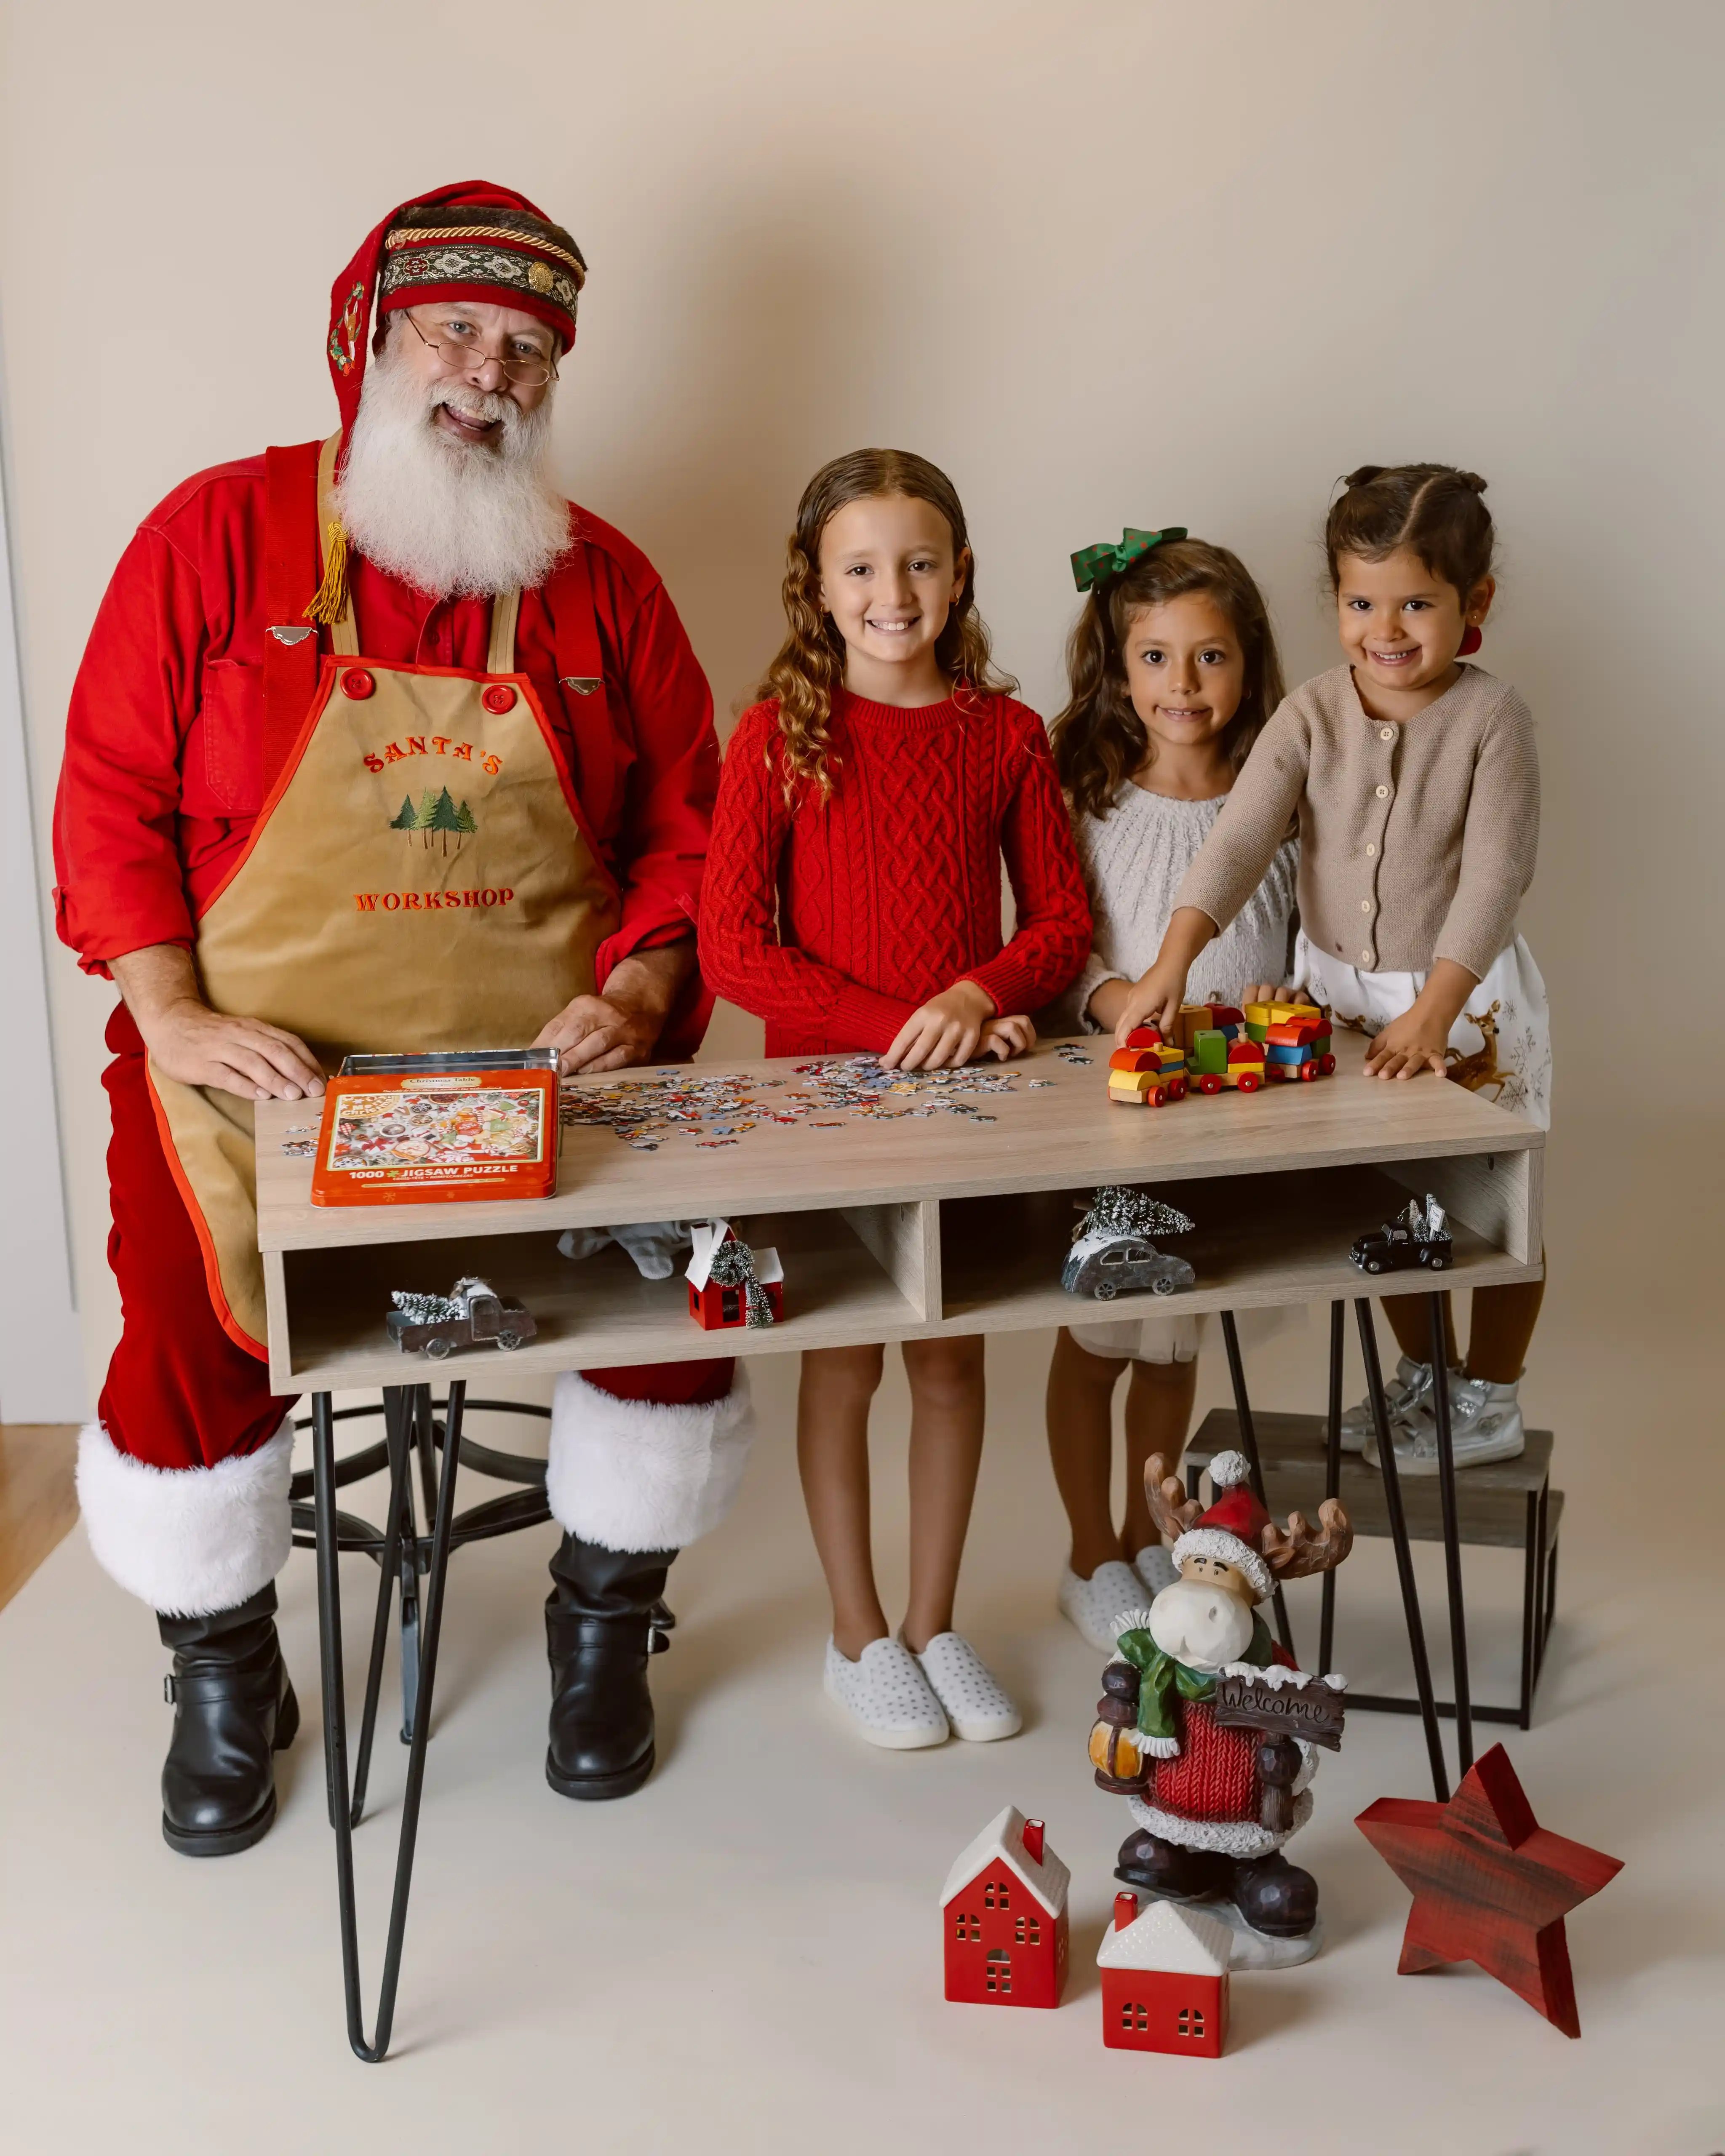 studio_childrens with santa - family photo with santa